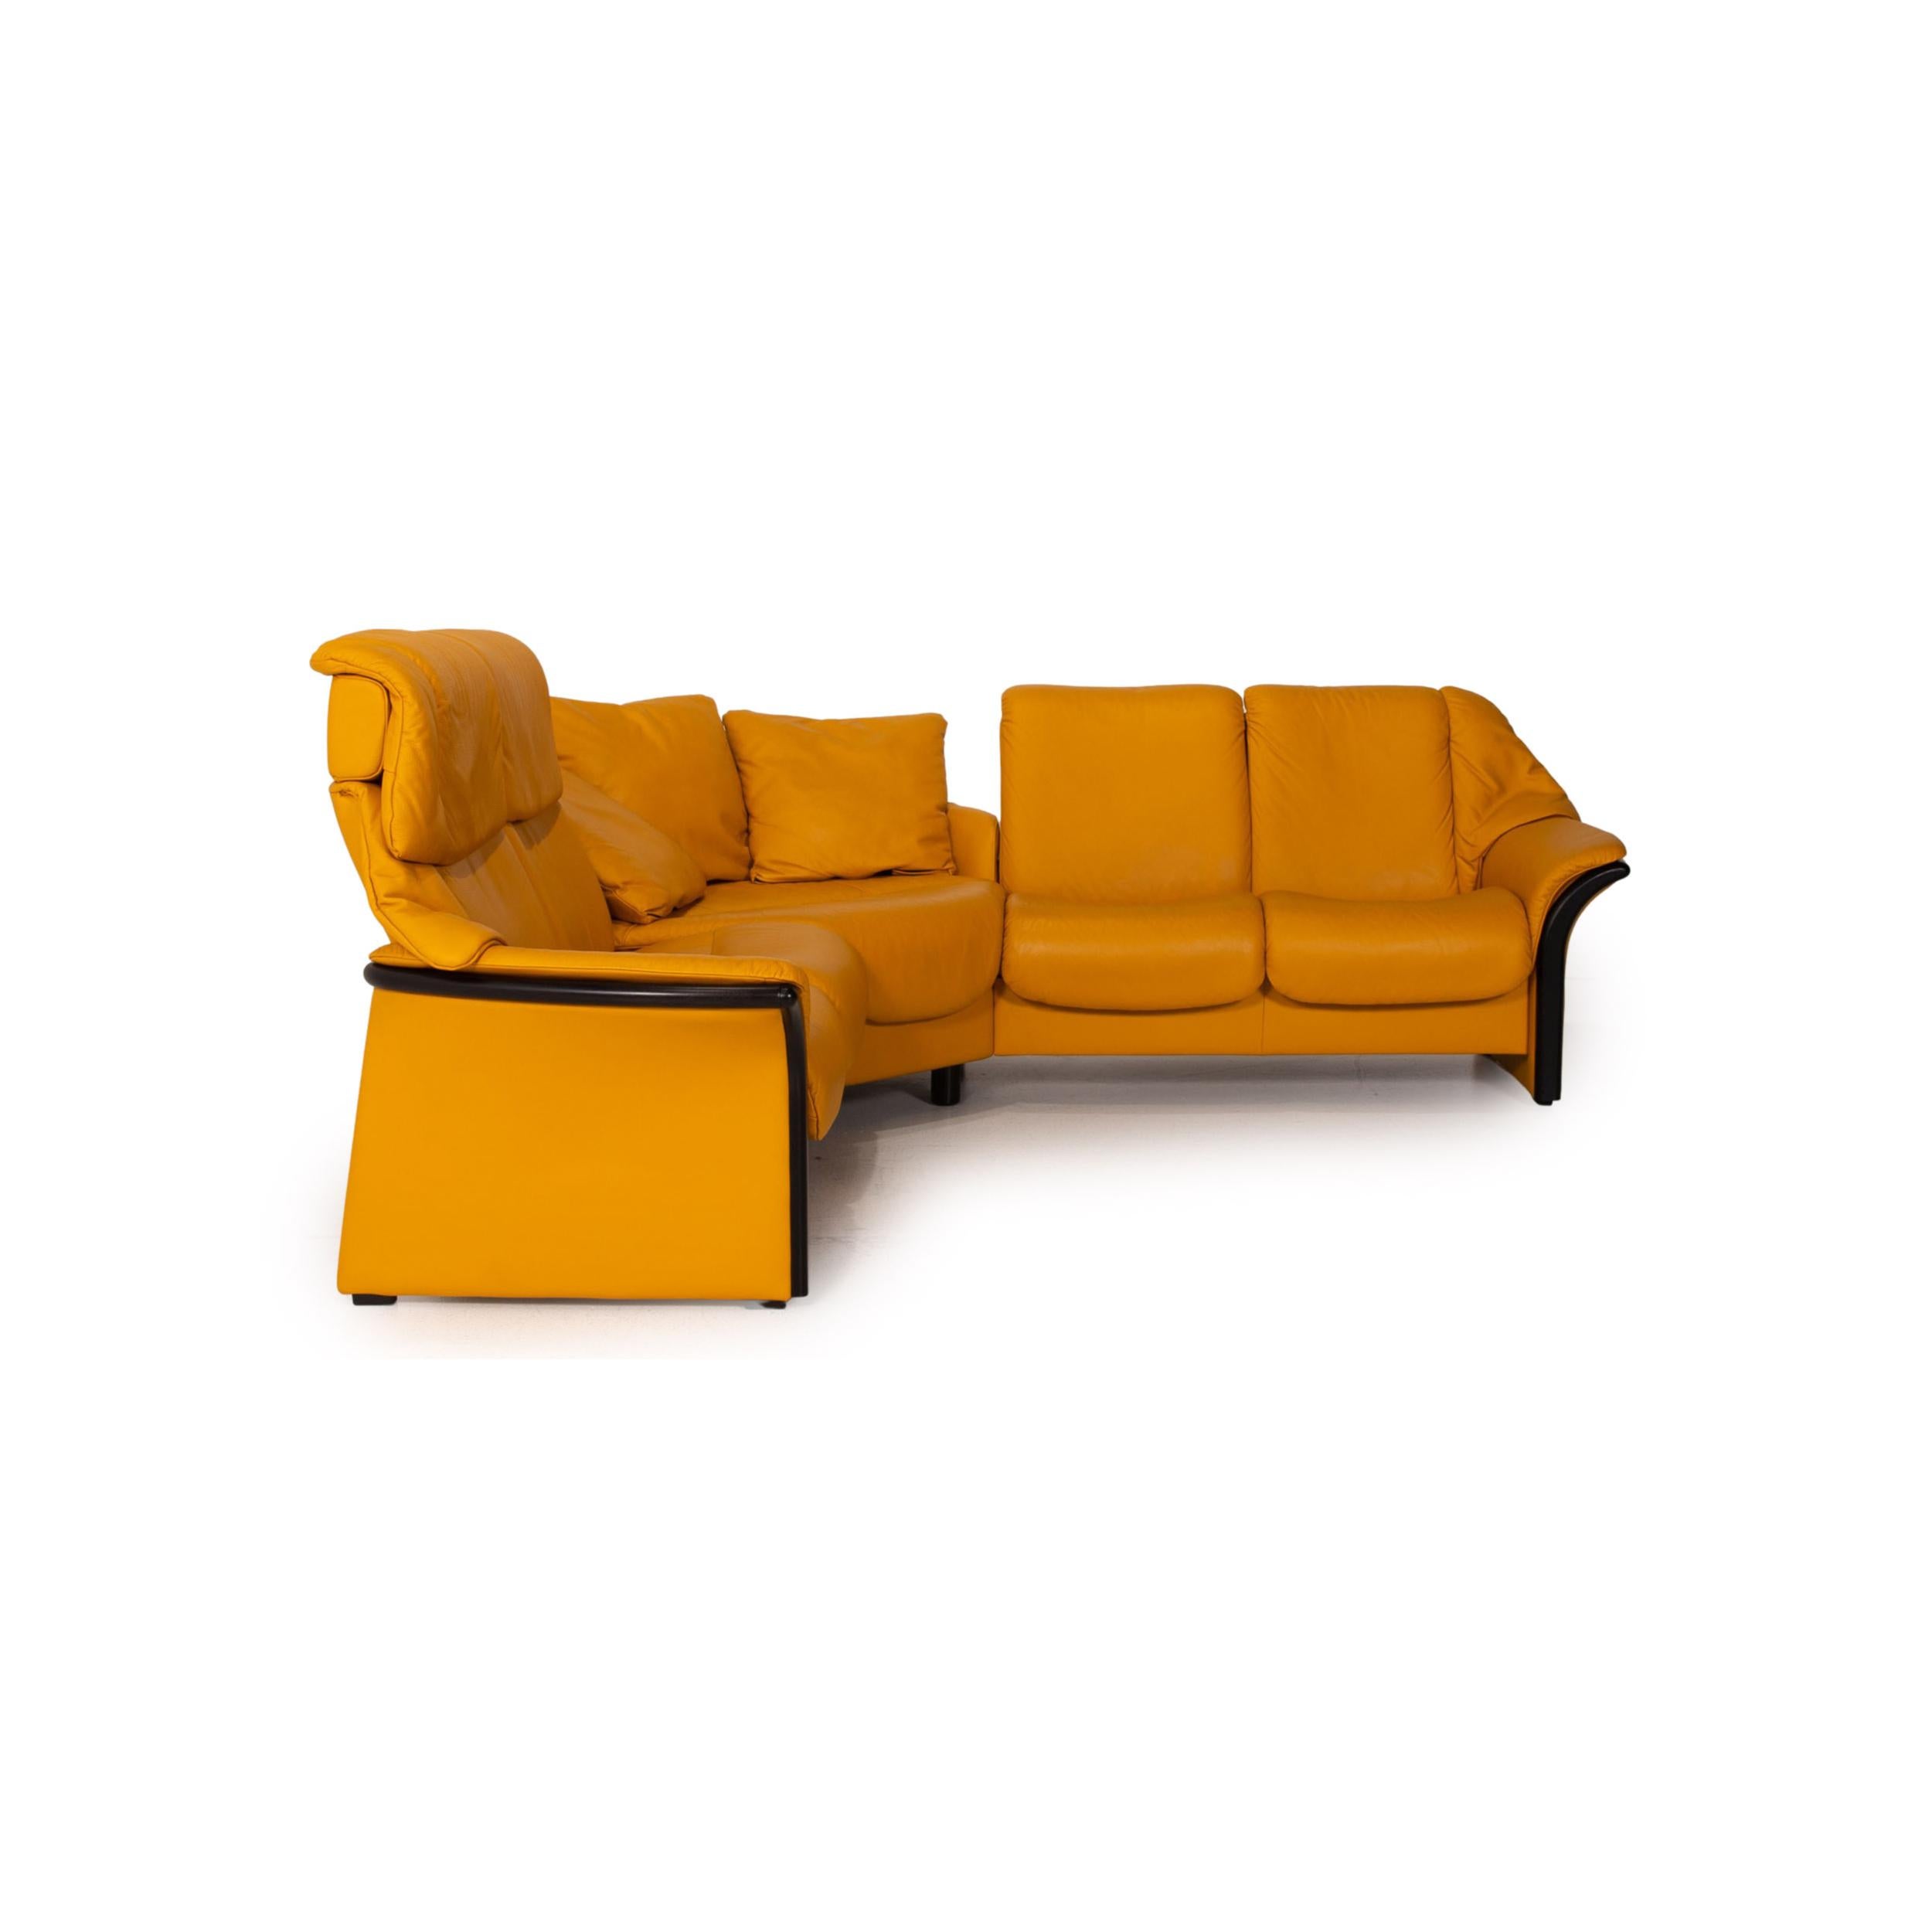 Stressless Eldorado Leather Corner Sofa Yellow Relax Function Sofa Couch 6